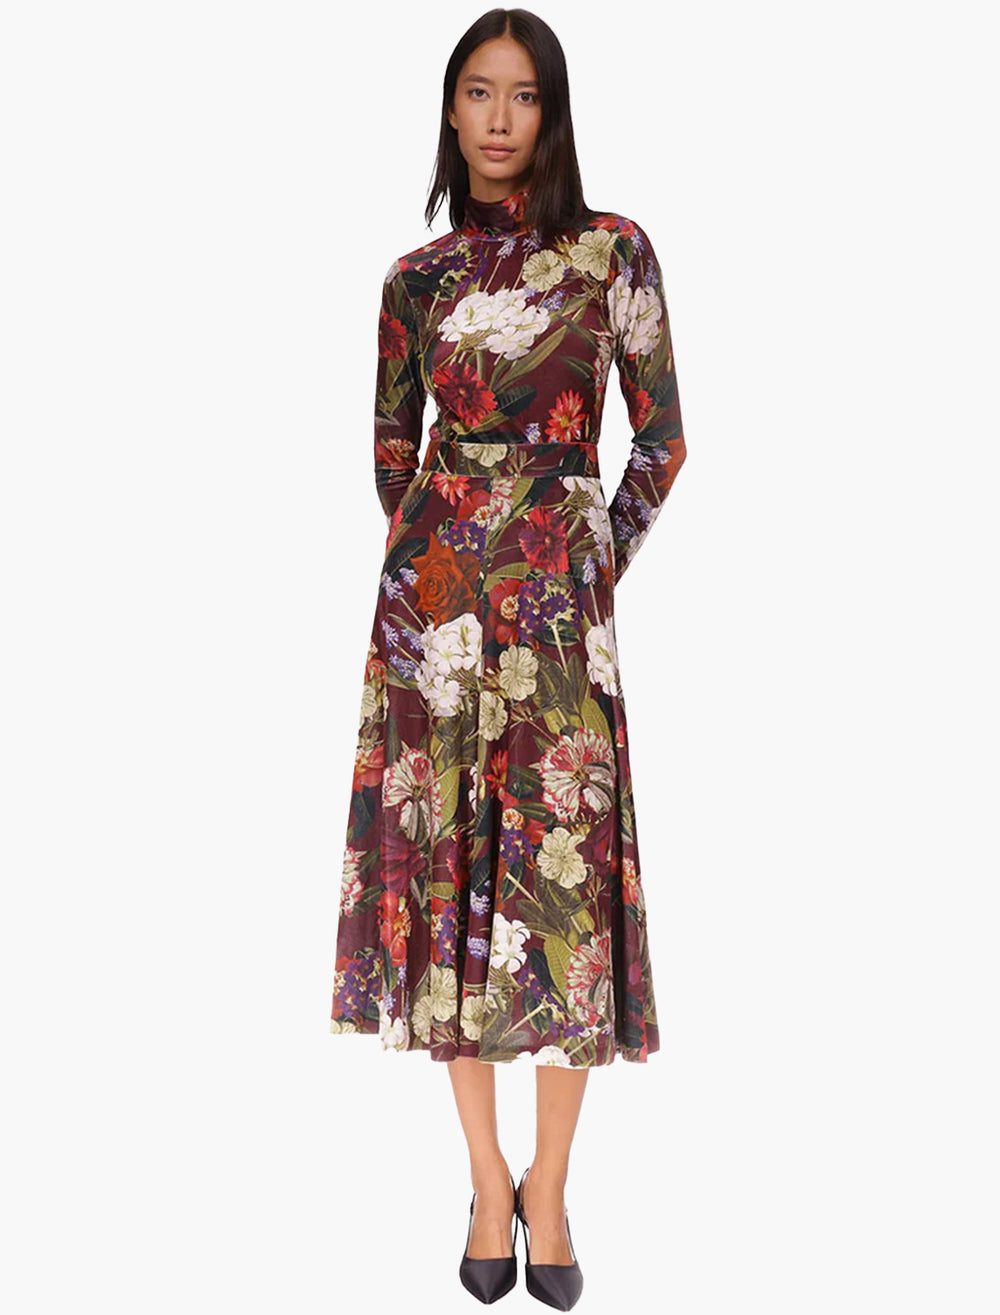 Model wearing Cara Cara's gianna skirt in garden flora.